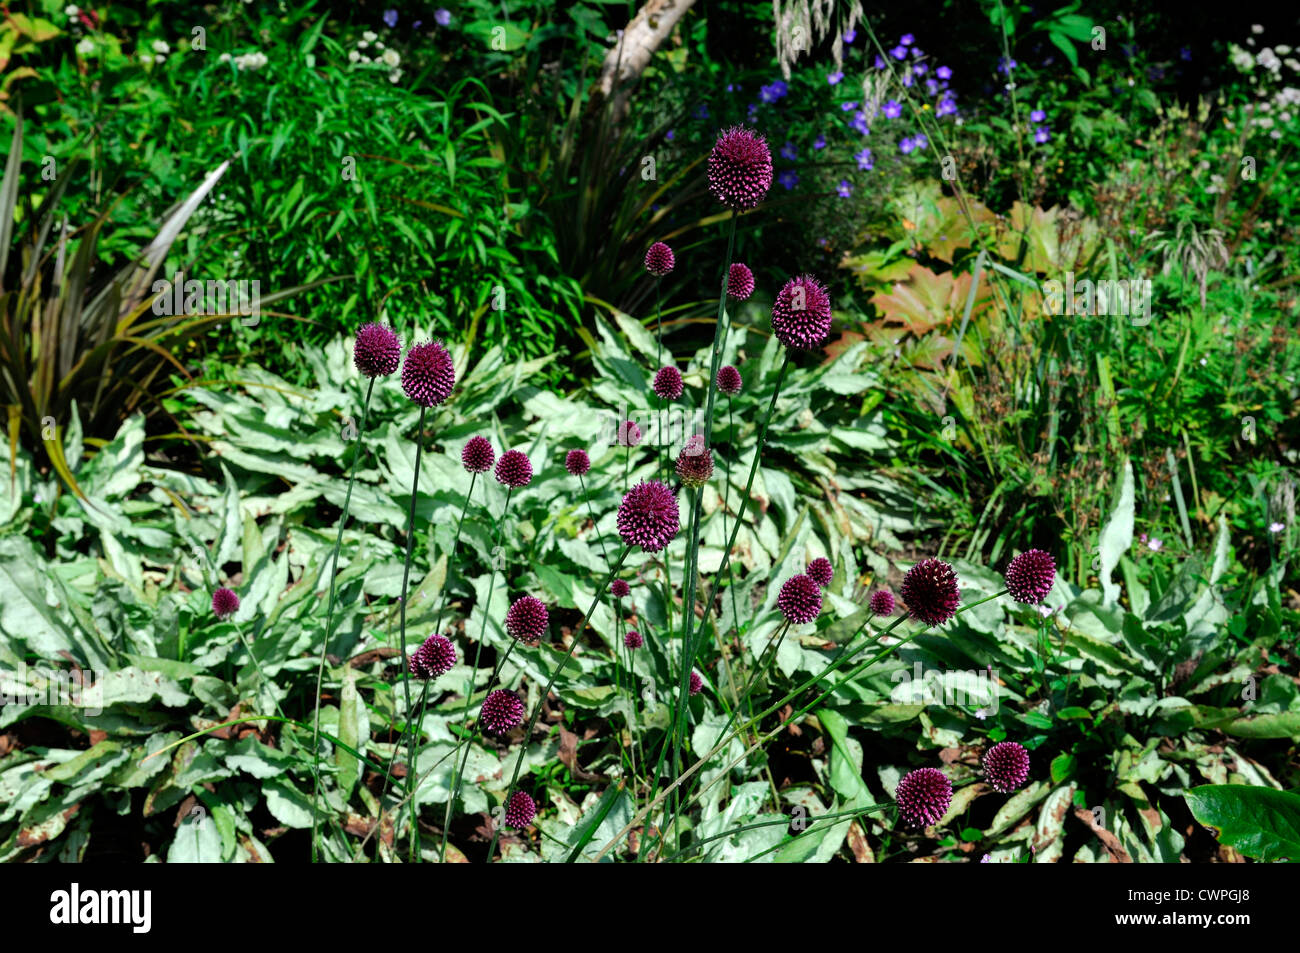 Allium sphaerocephalon purple flower perennial bulb ornamental onion Stock Photo